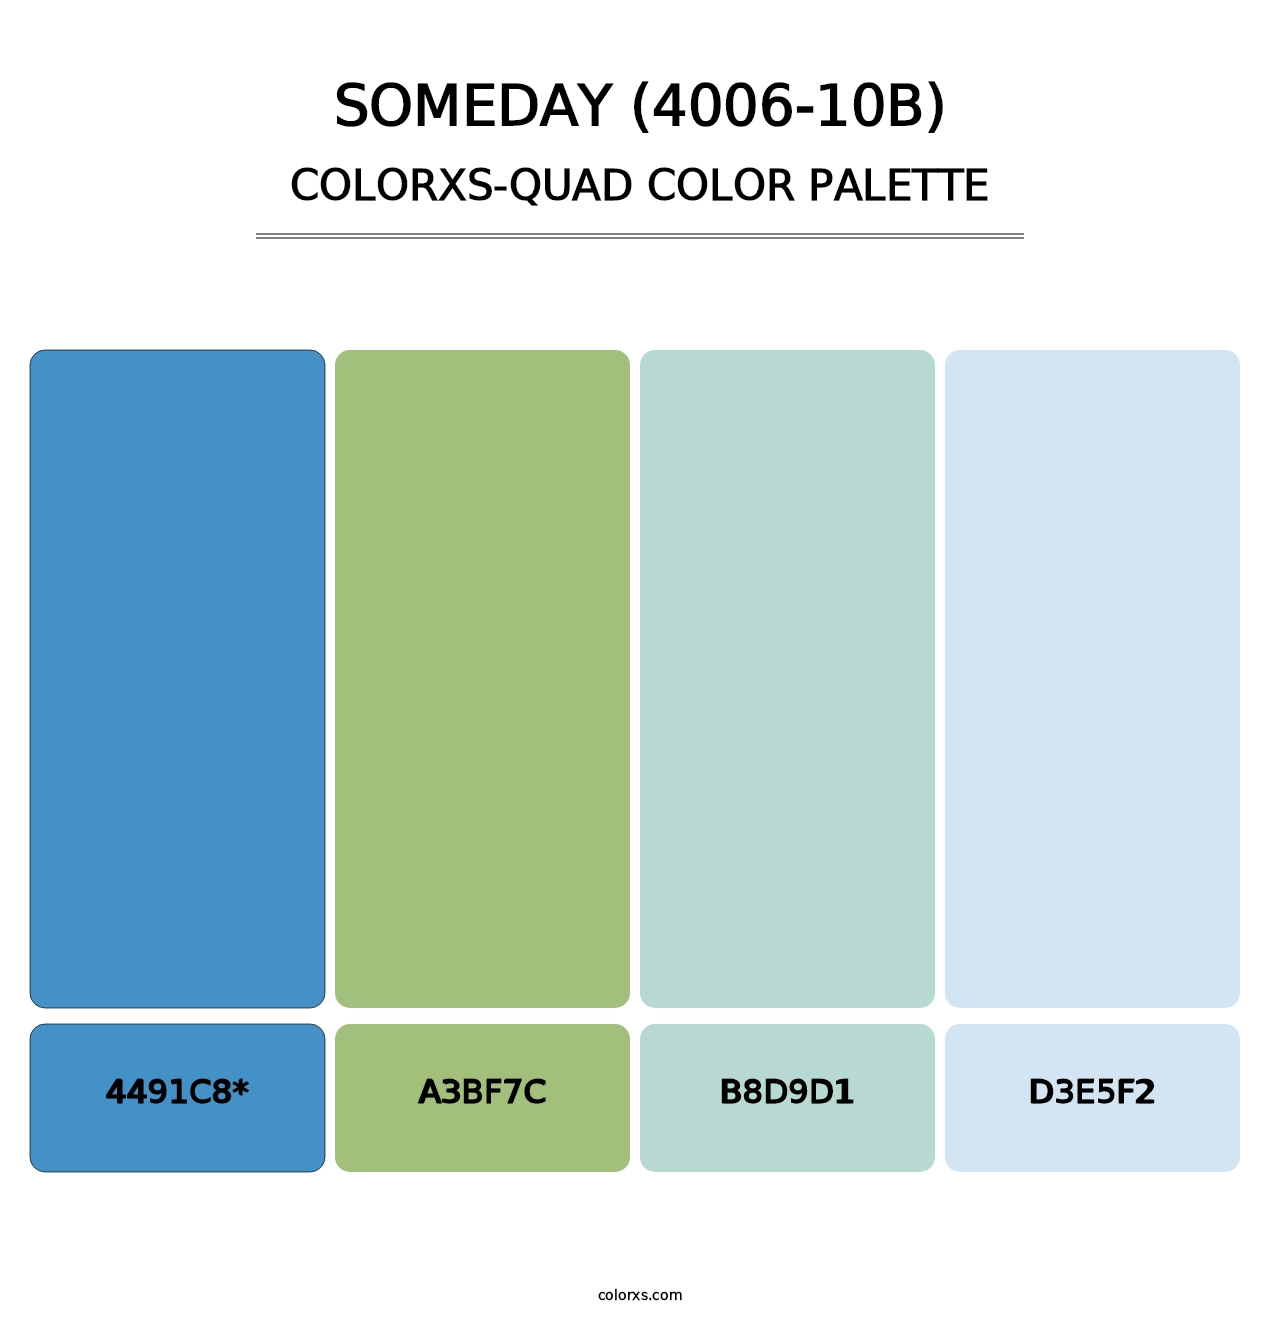 Someday (4006-10B) - Colorxs Quad Palette